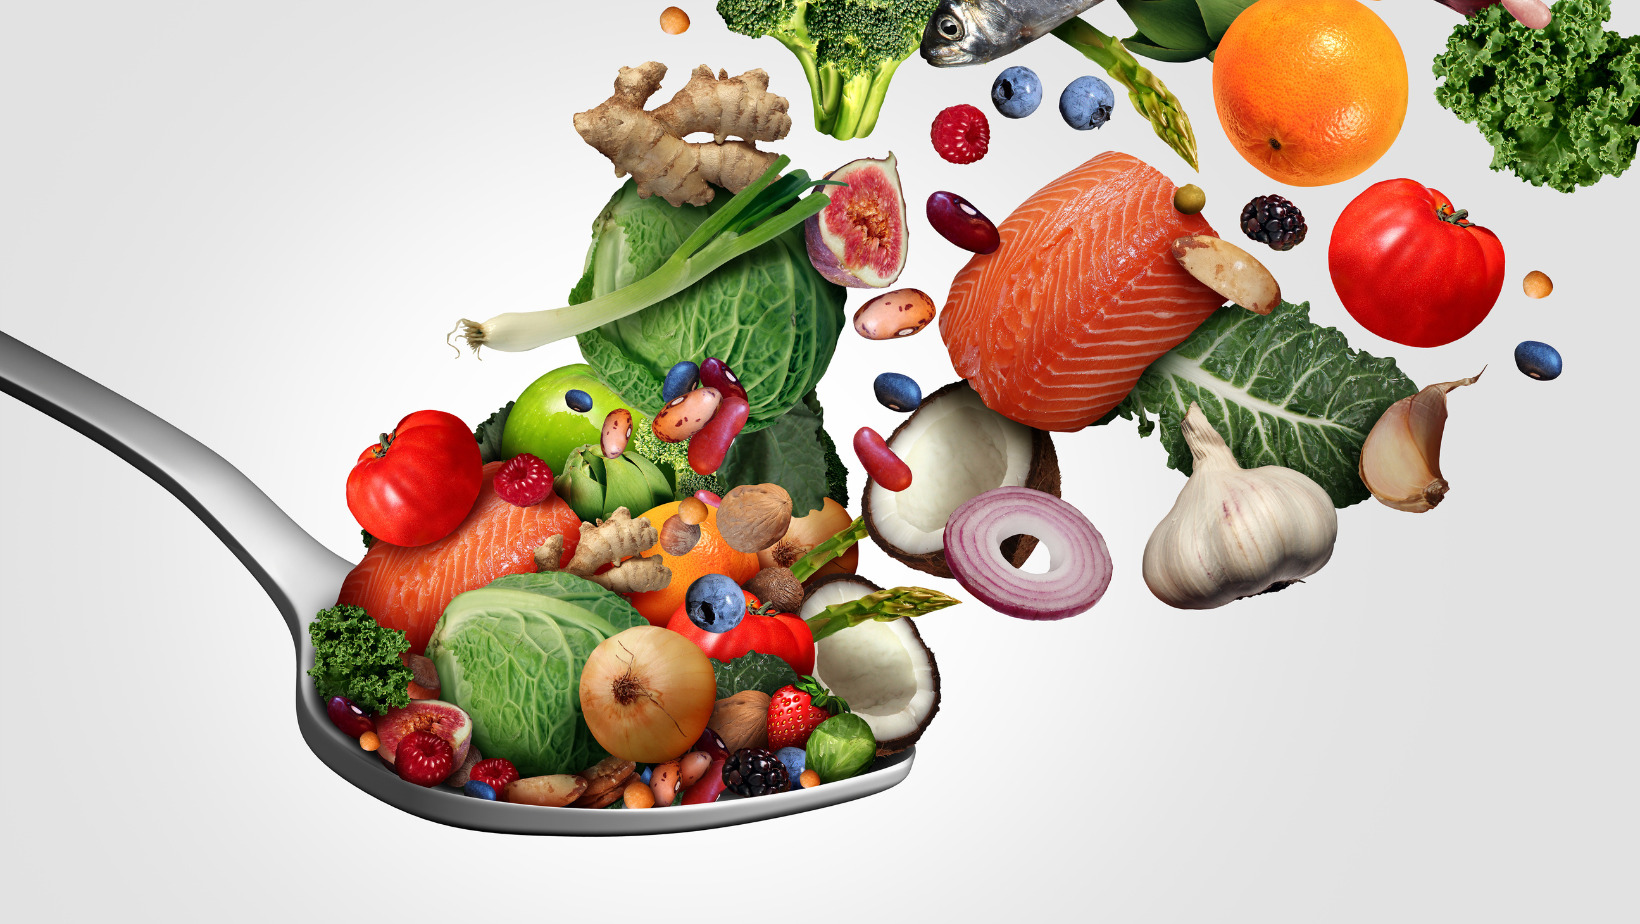 50 immuunversterkende voedingsmiddelen